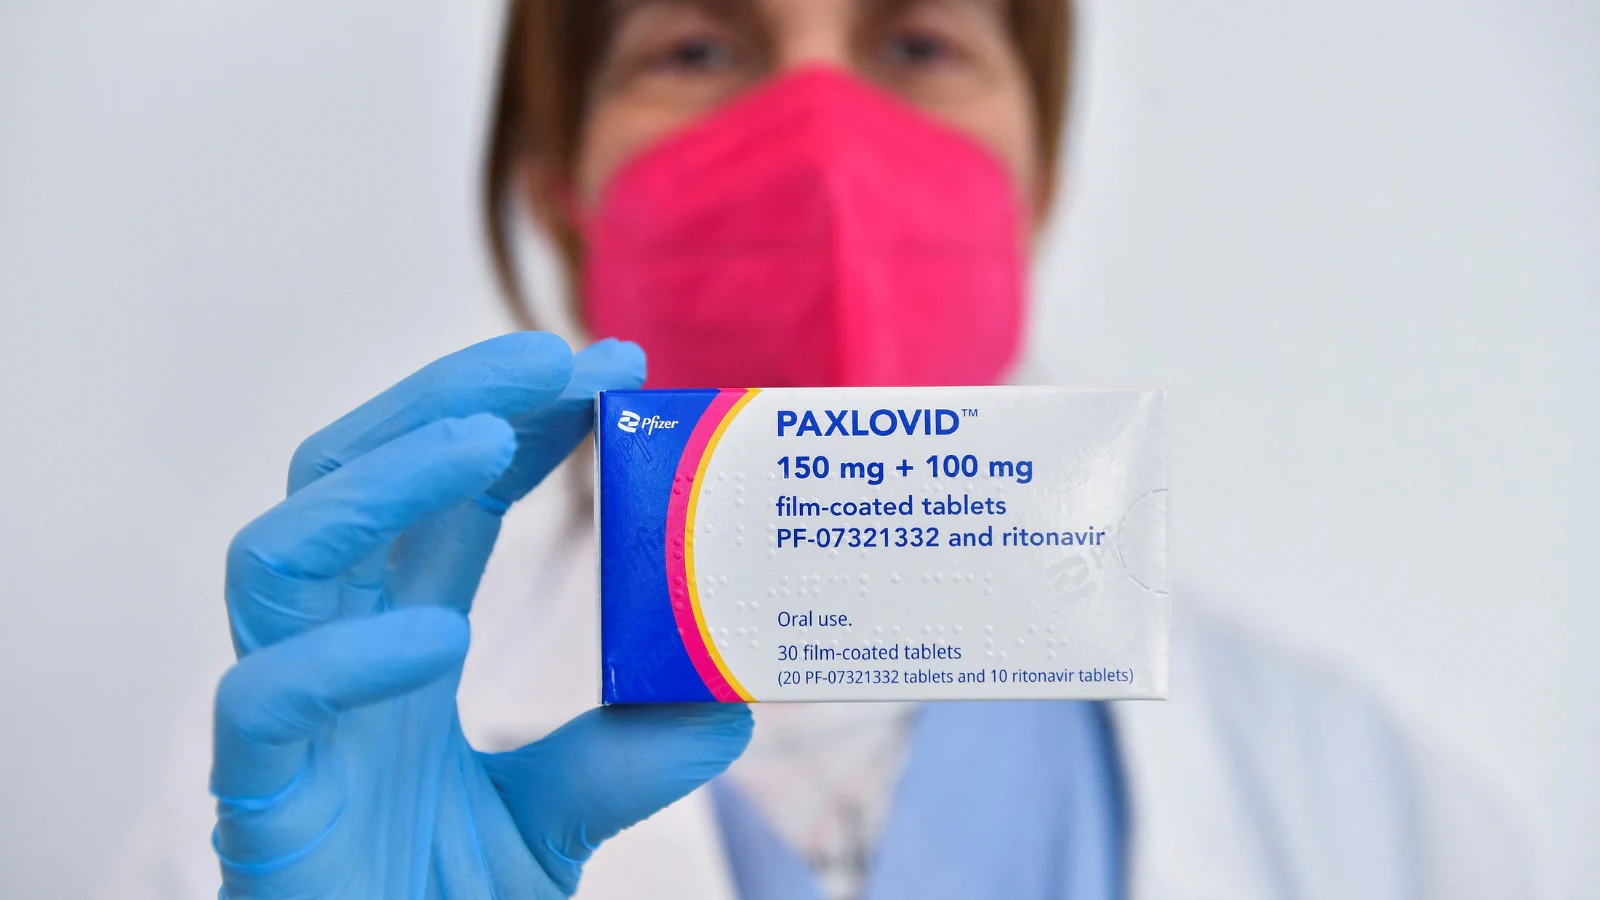 'PaxLovid' Corona's 'panacea medicine'